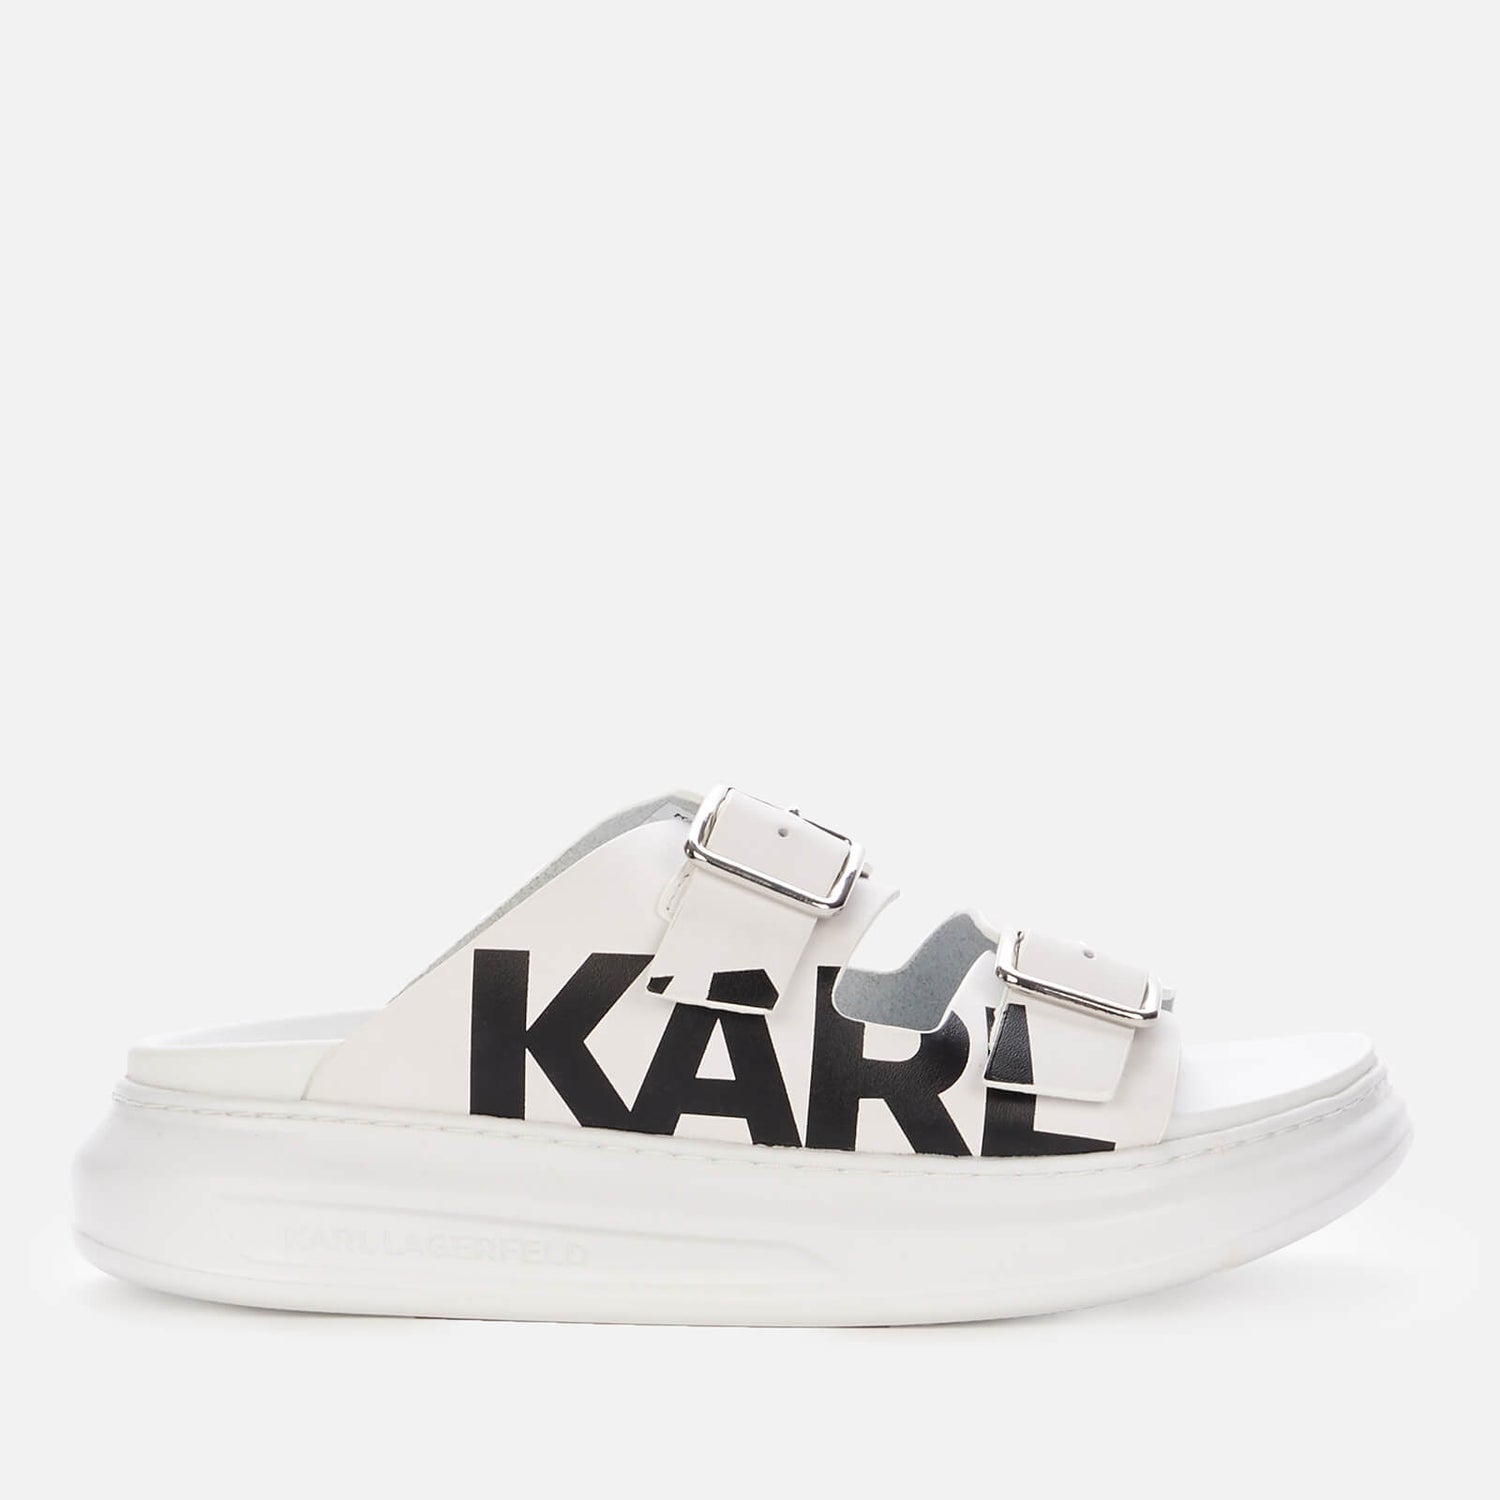 KARL LAGERFELD Women's Kapri Leather Flatform Sandals - White